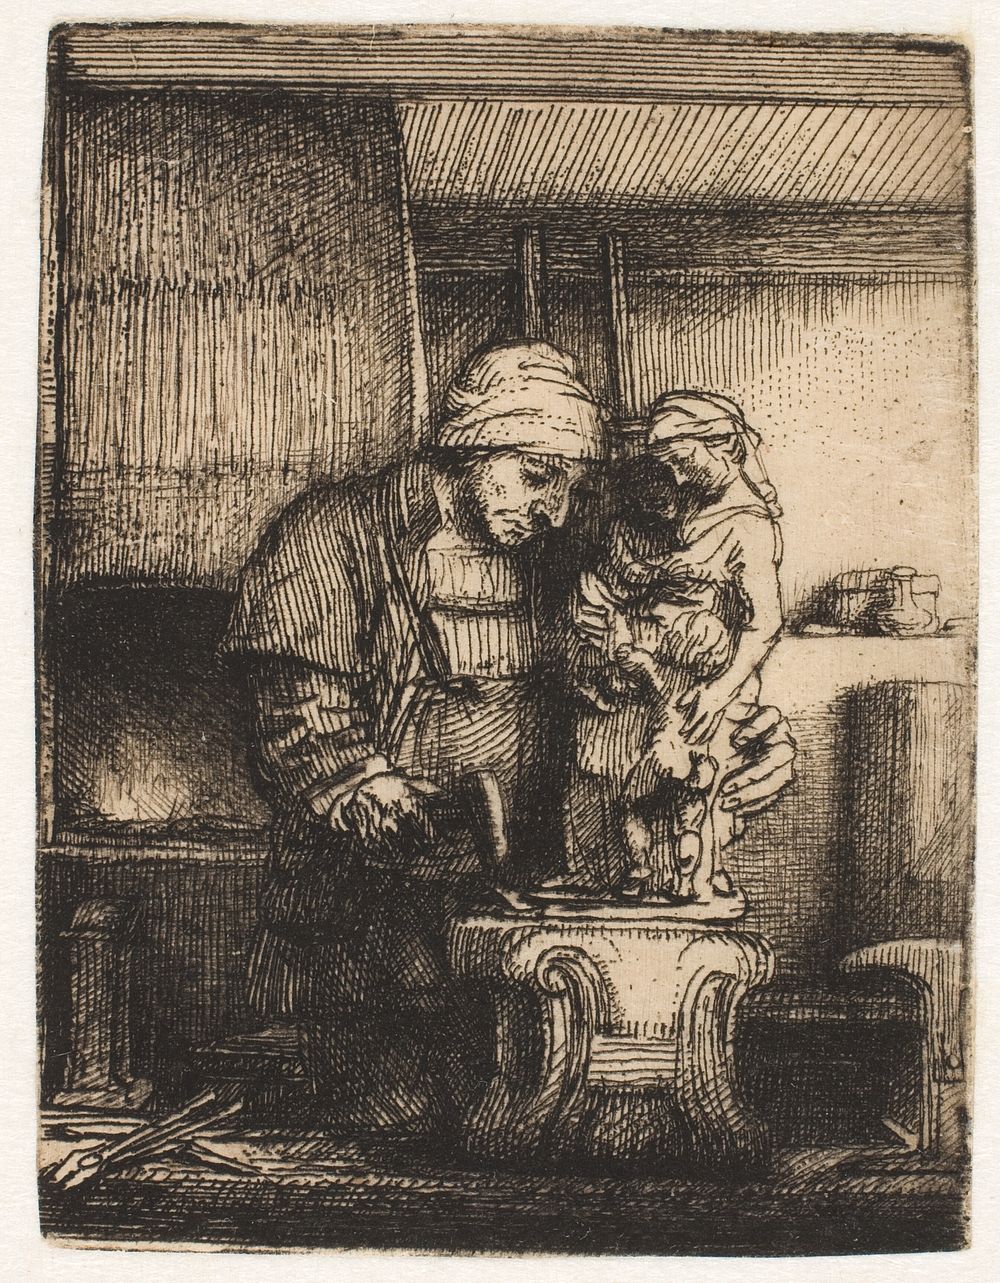 The goldsmith by Rembrandt van Rijn